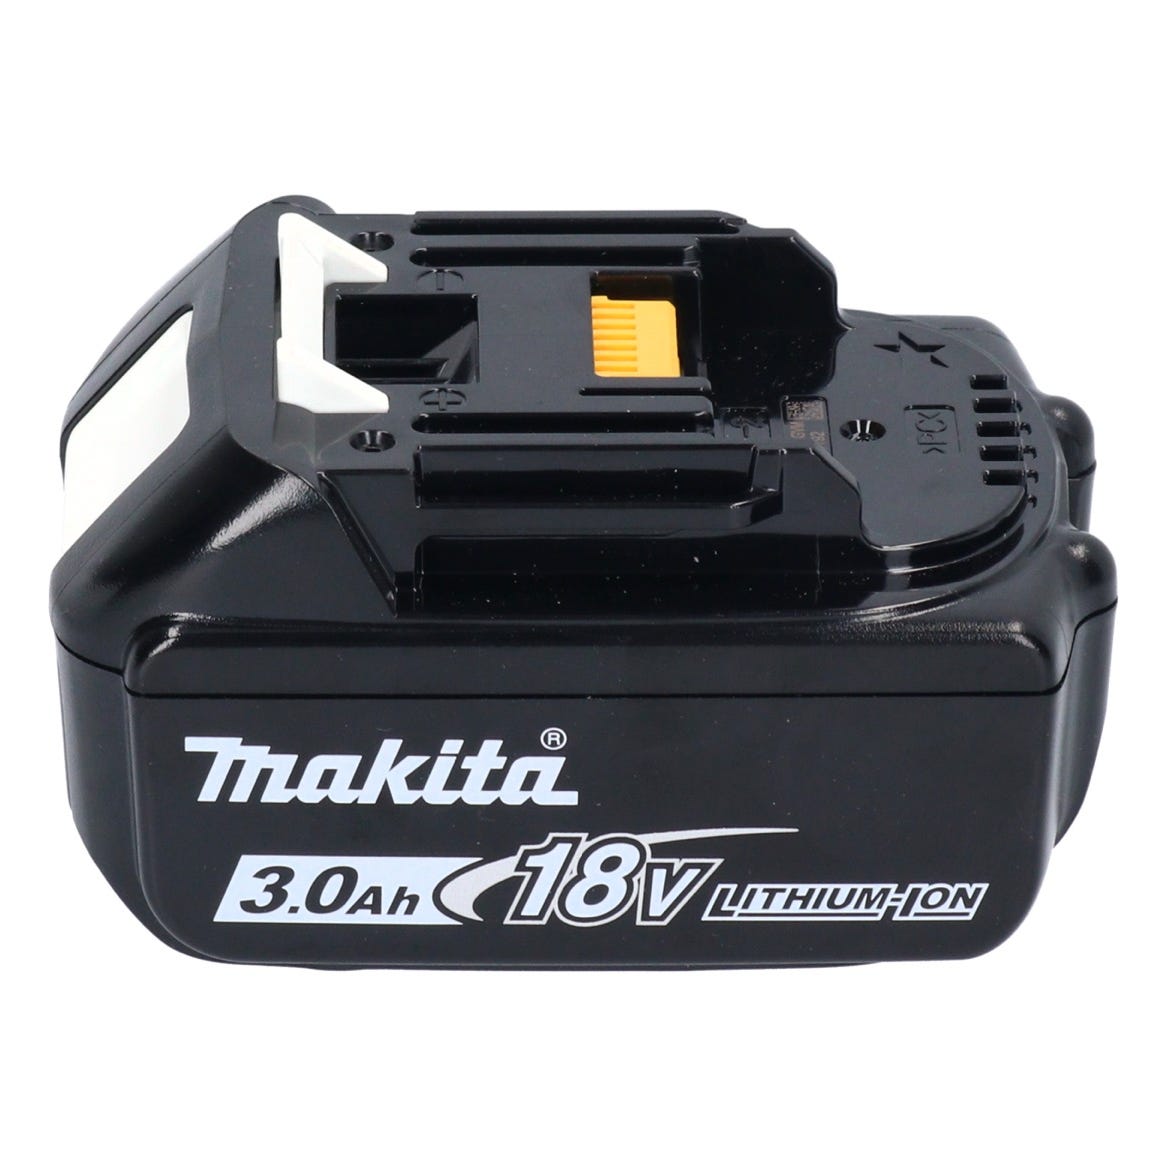 Makita kit batterie 5x BL 1830 B 18 V 3,0 Ah / 3000 mAh Li-Ion ( 5x 197599-5 ) avec affichage LED - original, pas de copie 1